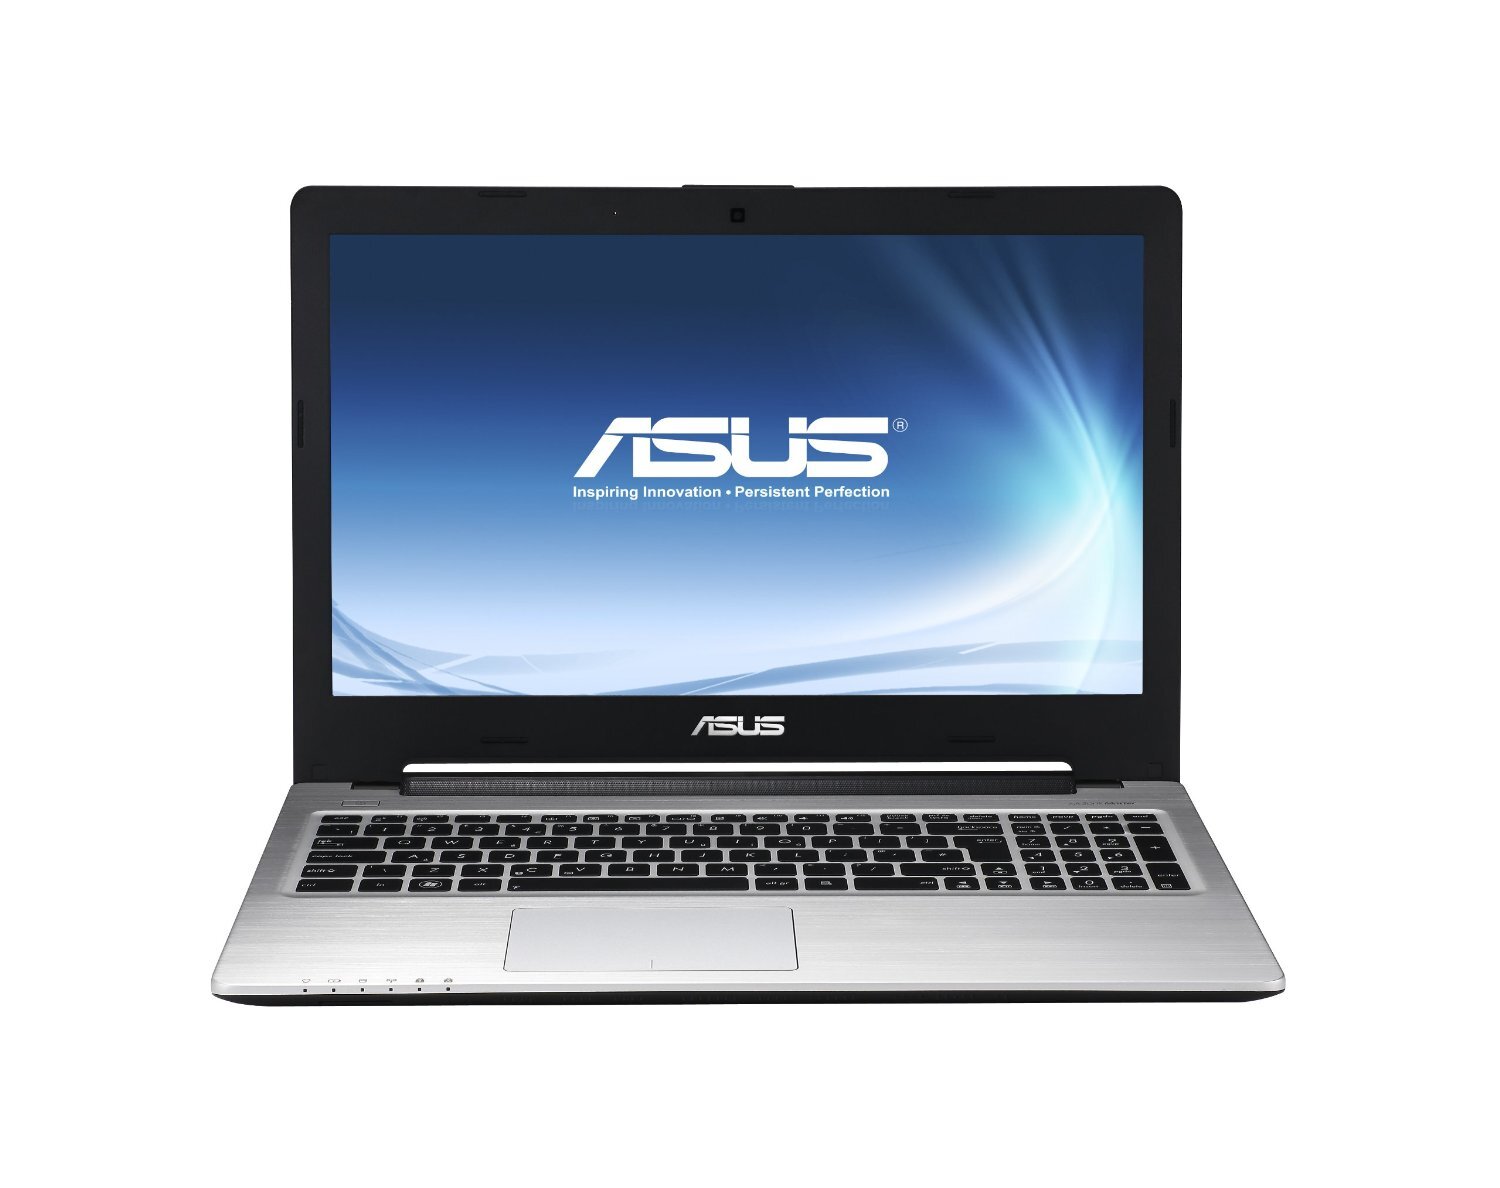 Laptop Asus S56CA-BH51 - Intel Core i5-3317U 1.7GHz, 6GB RAM, 774GB (24GB SSD + 750GB HDD), VGA Intel HD Graphics 4000, 15.6 inch